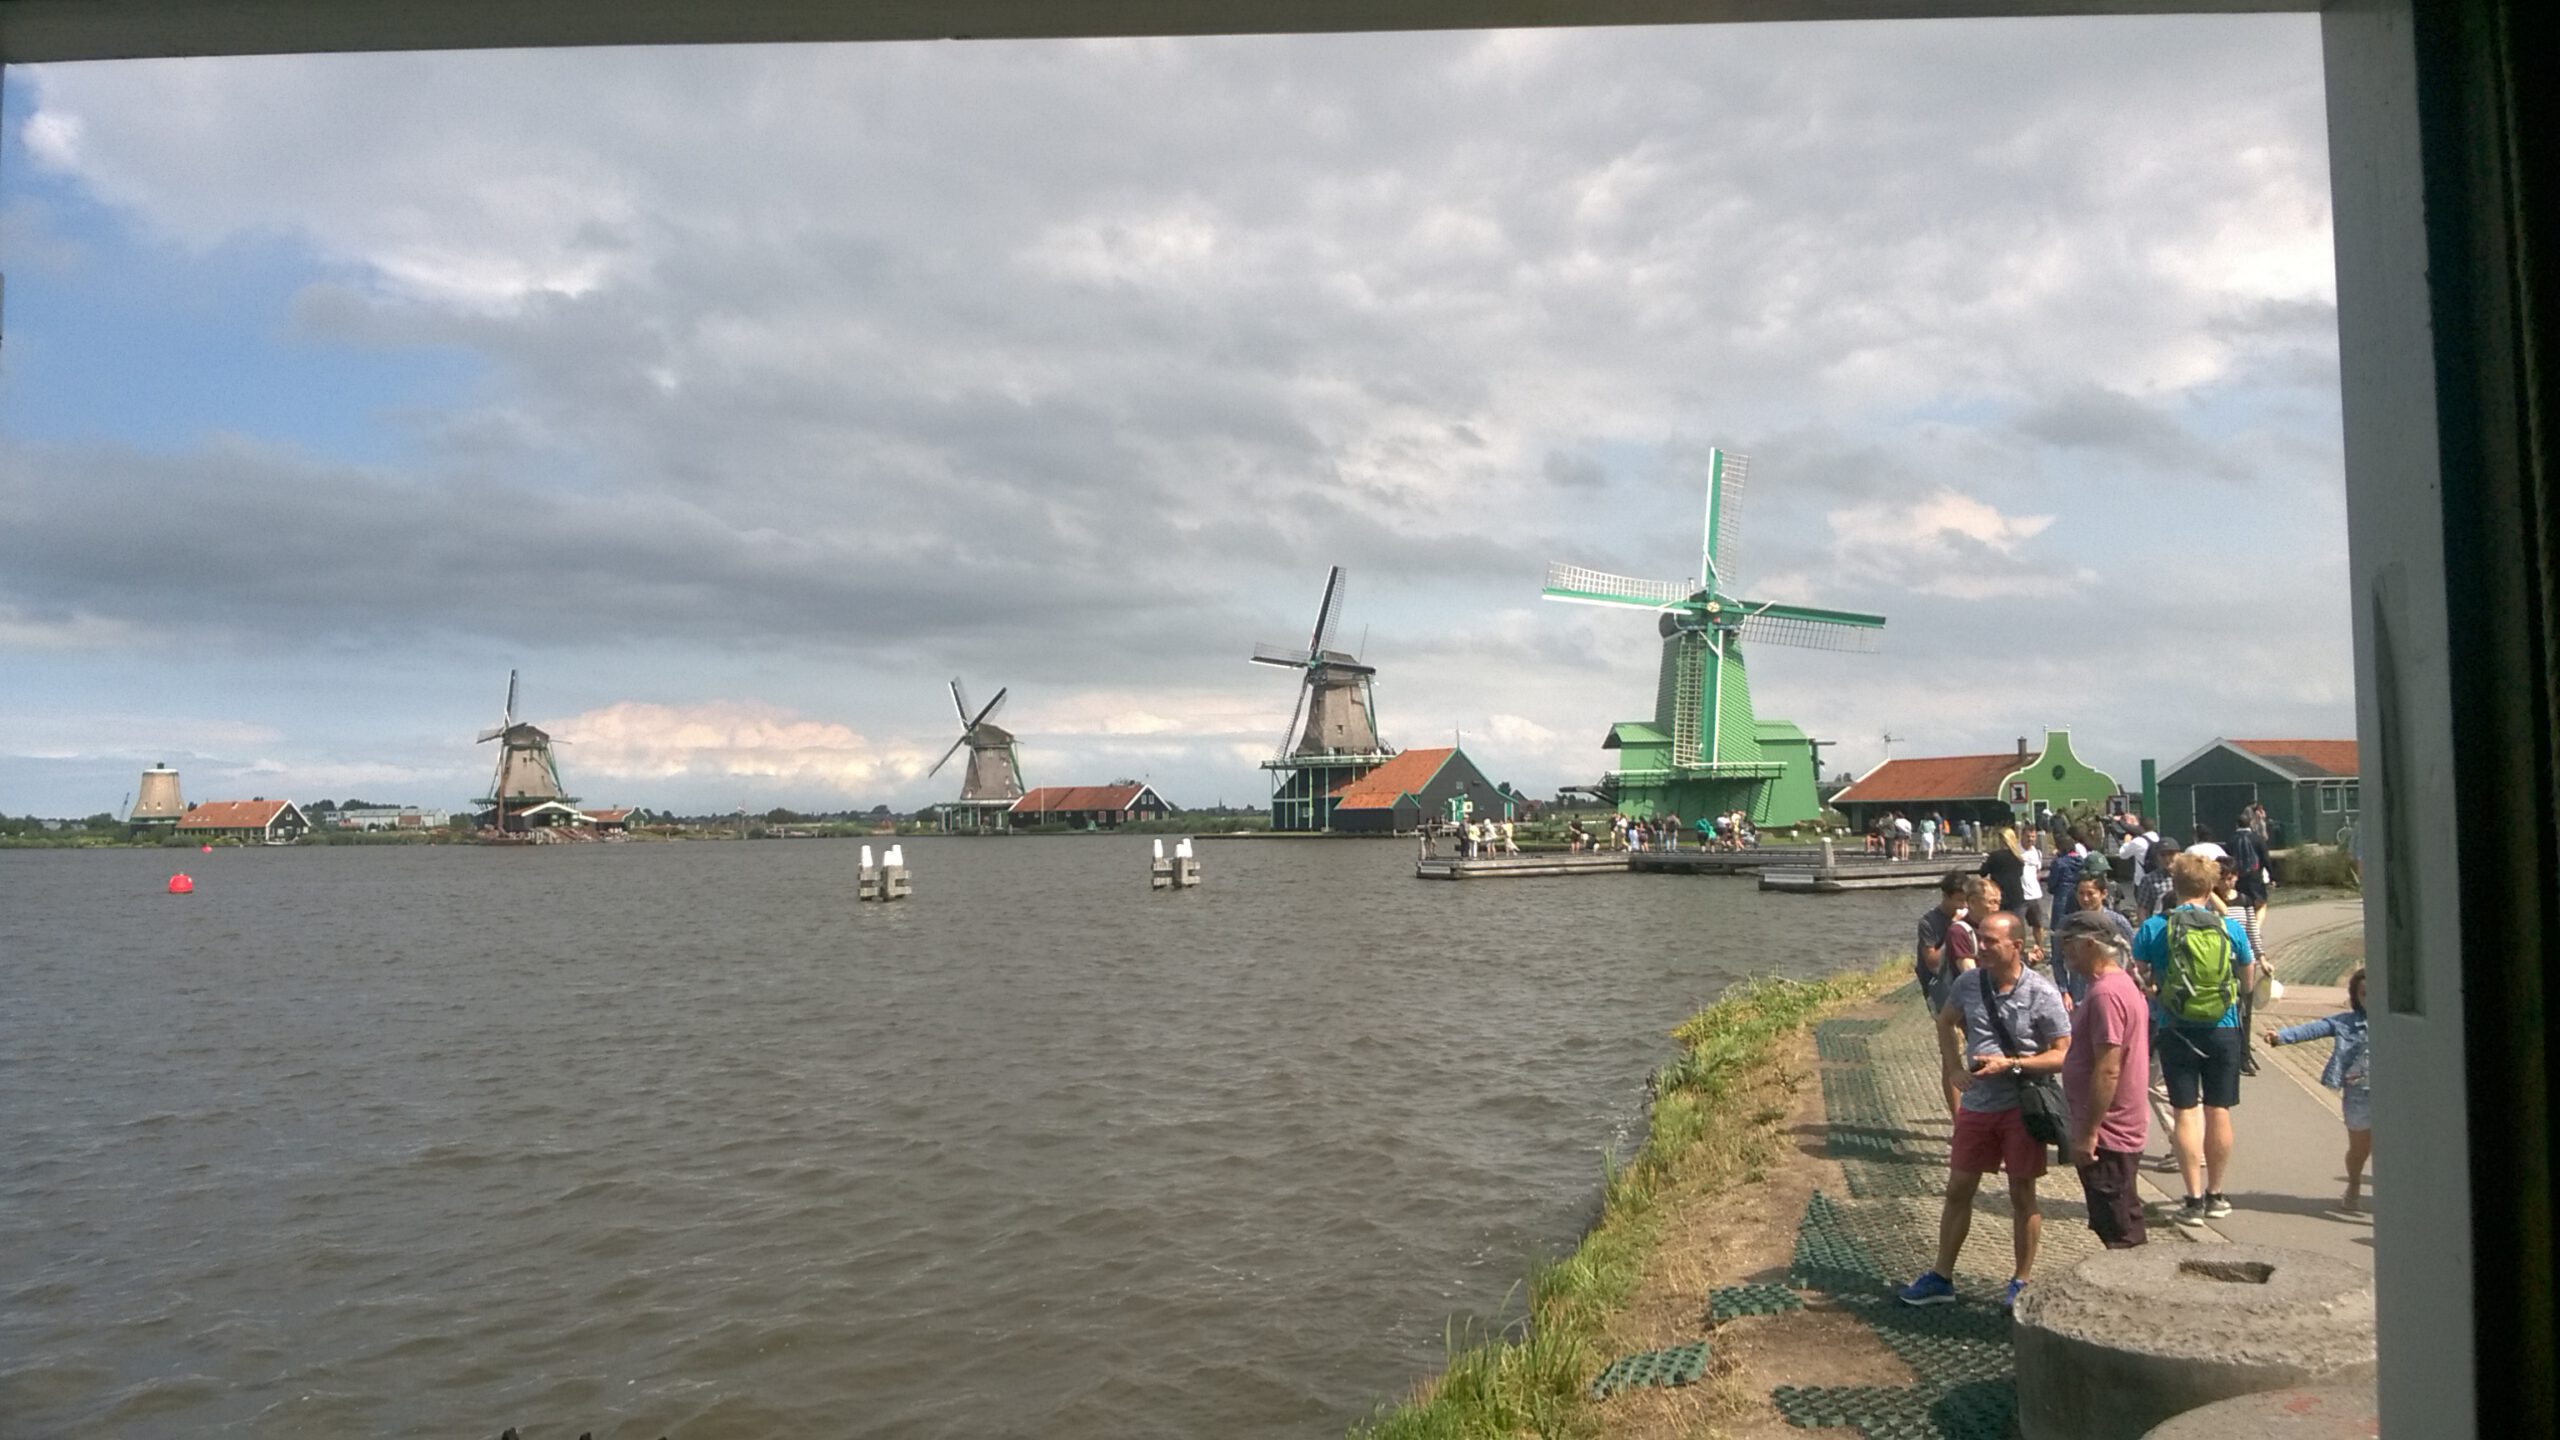 Which is more cheaper to visit Kinderdijk or Zaanse schans?